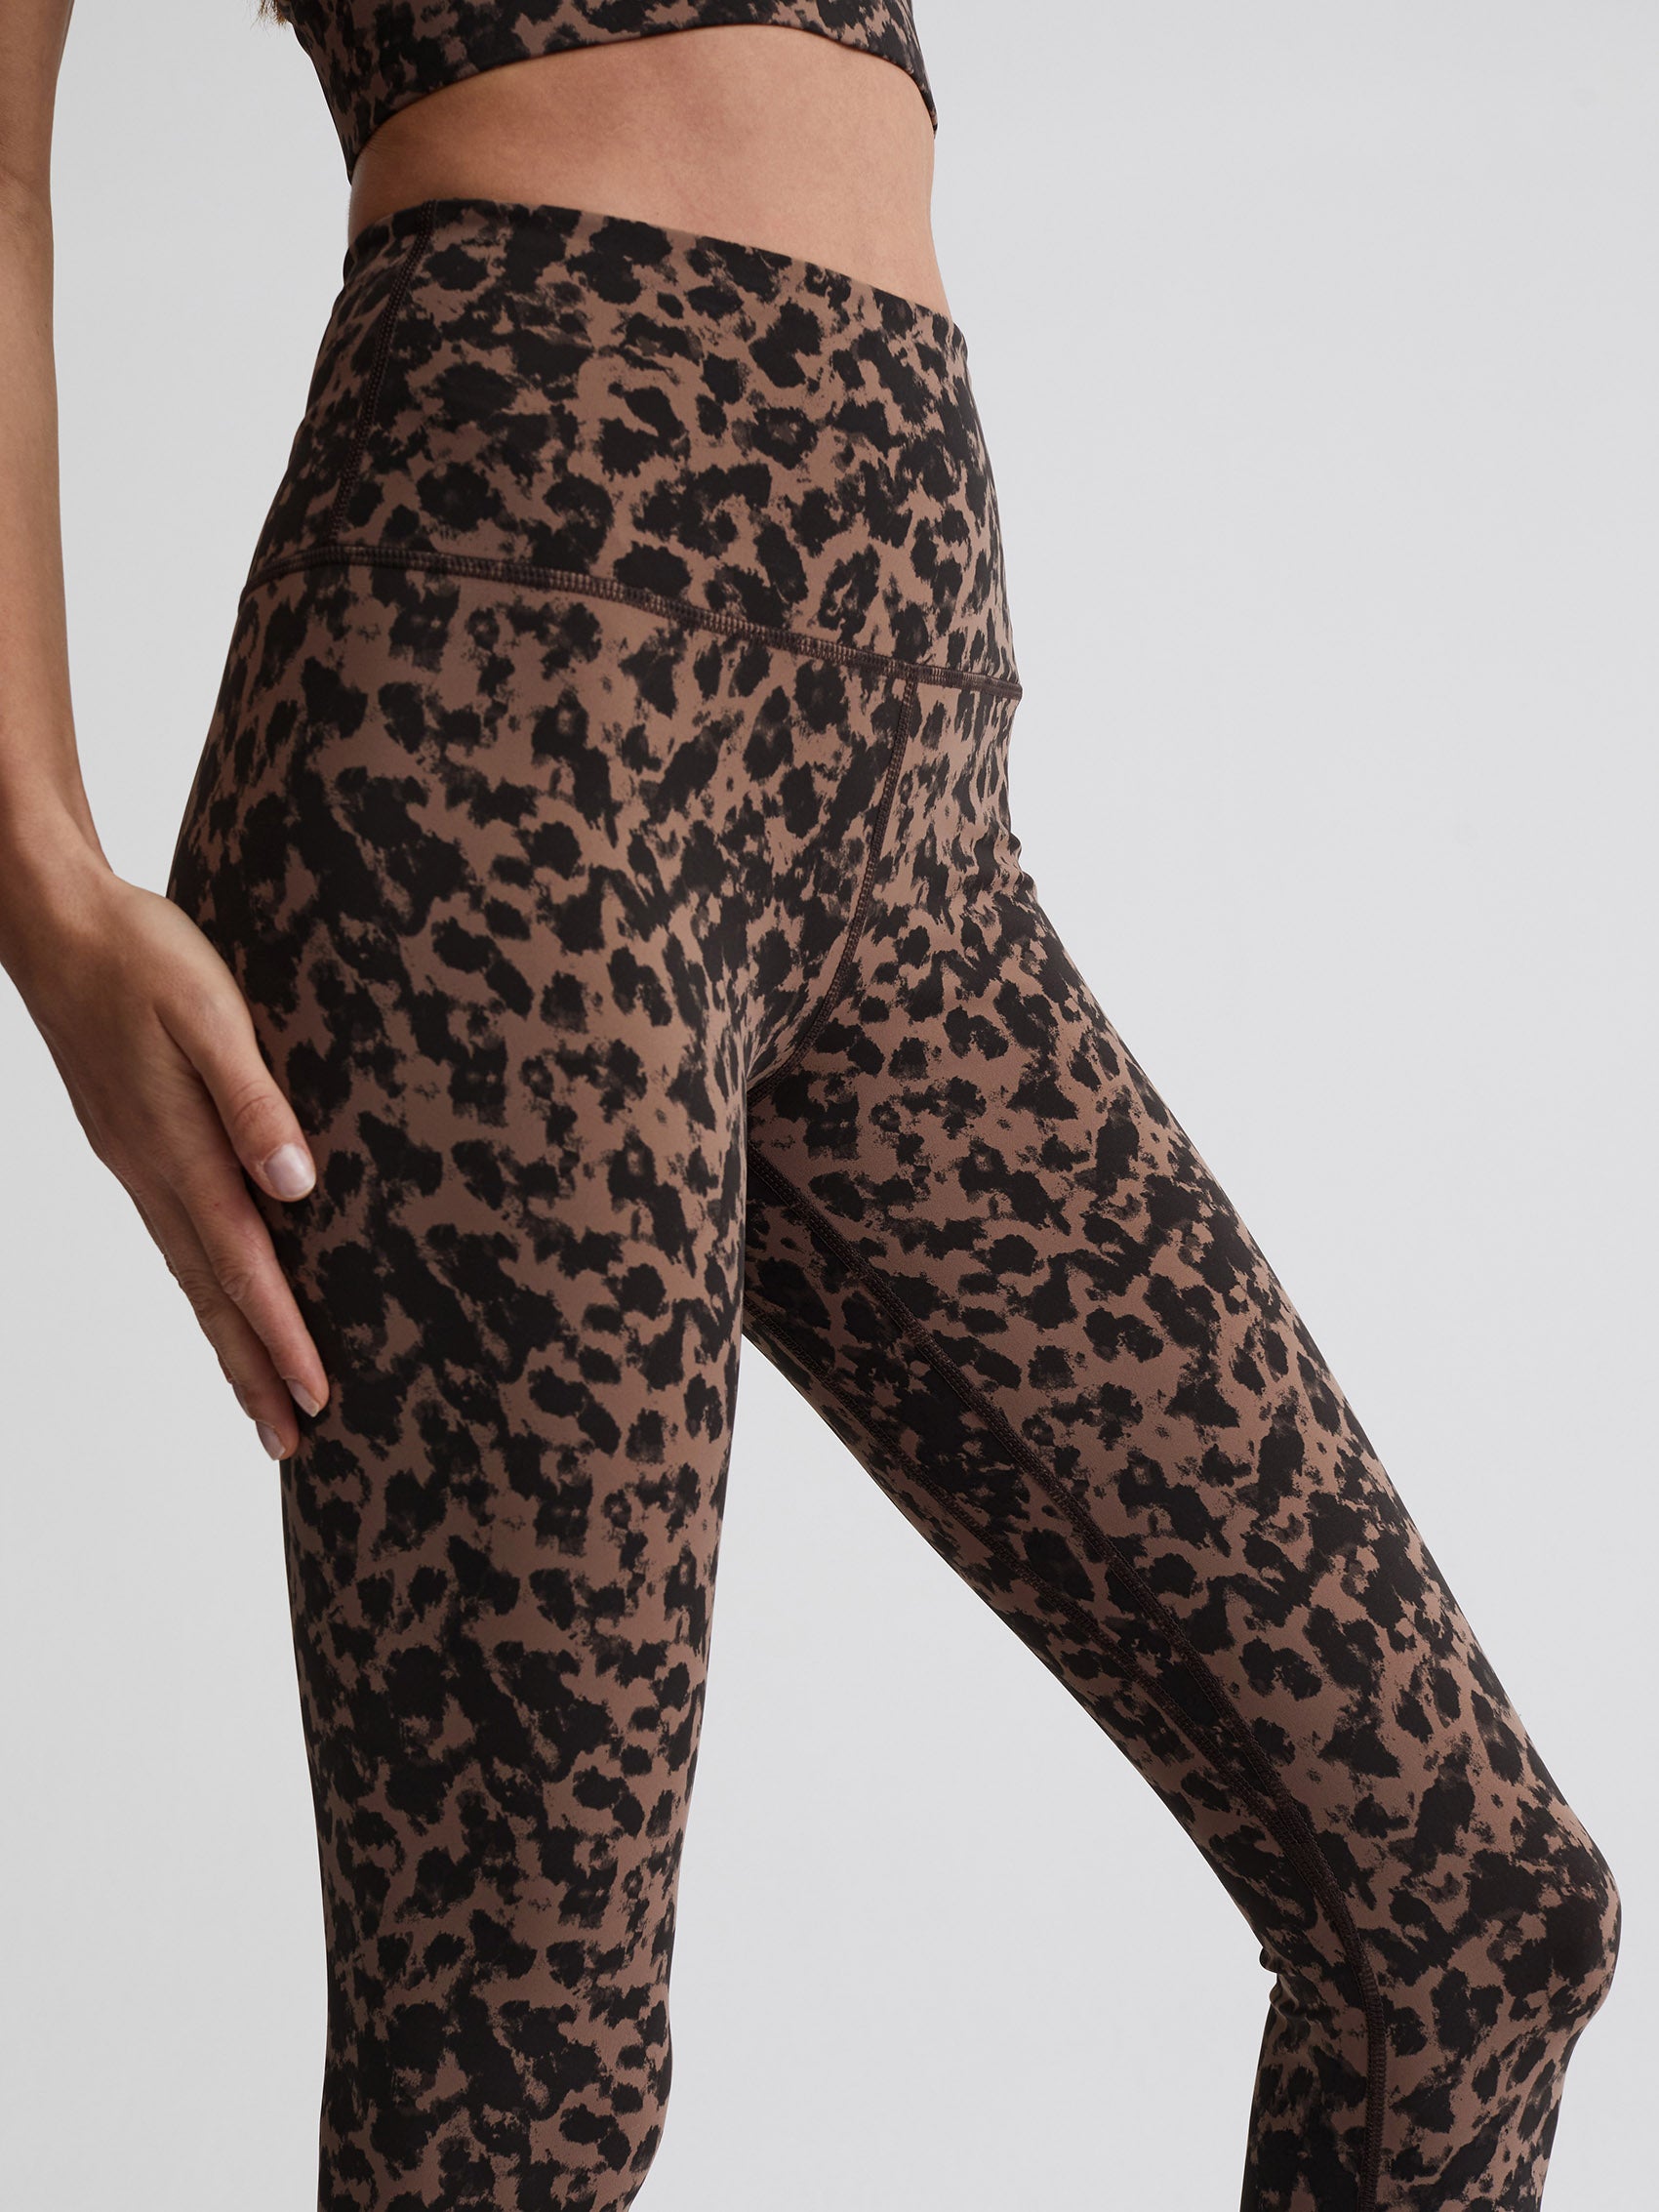 VARLEY Let's Go Staunton leopard-print stretch sports bra